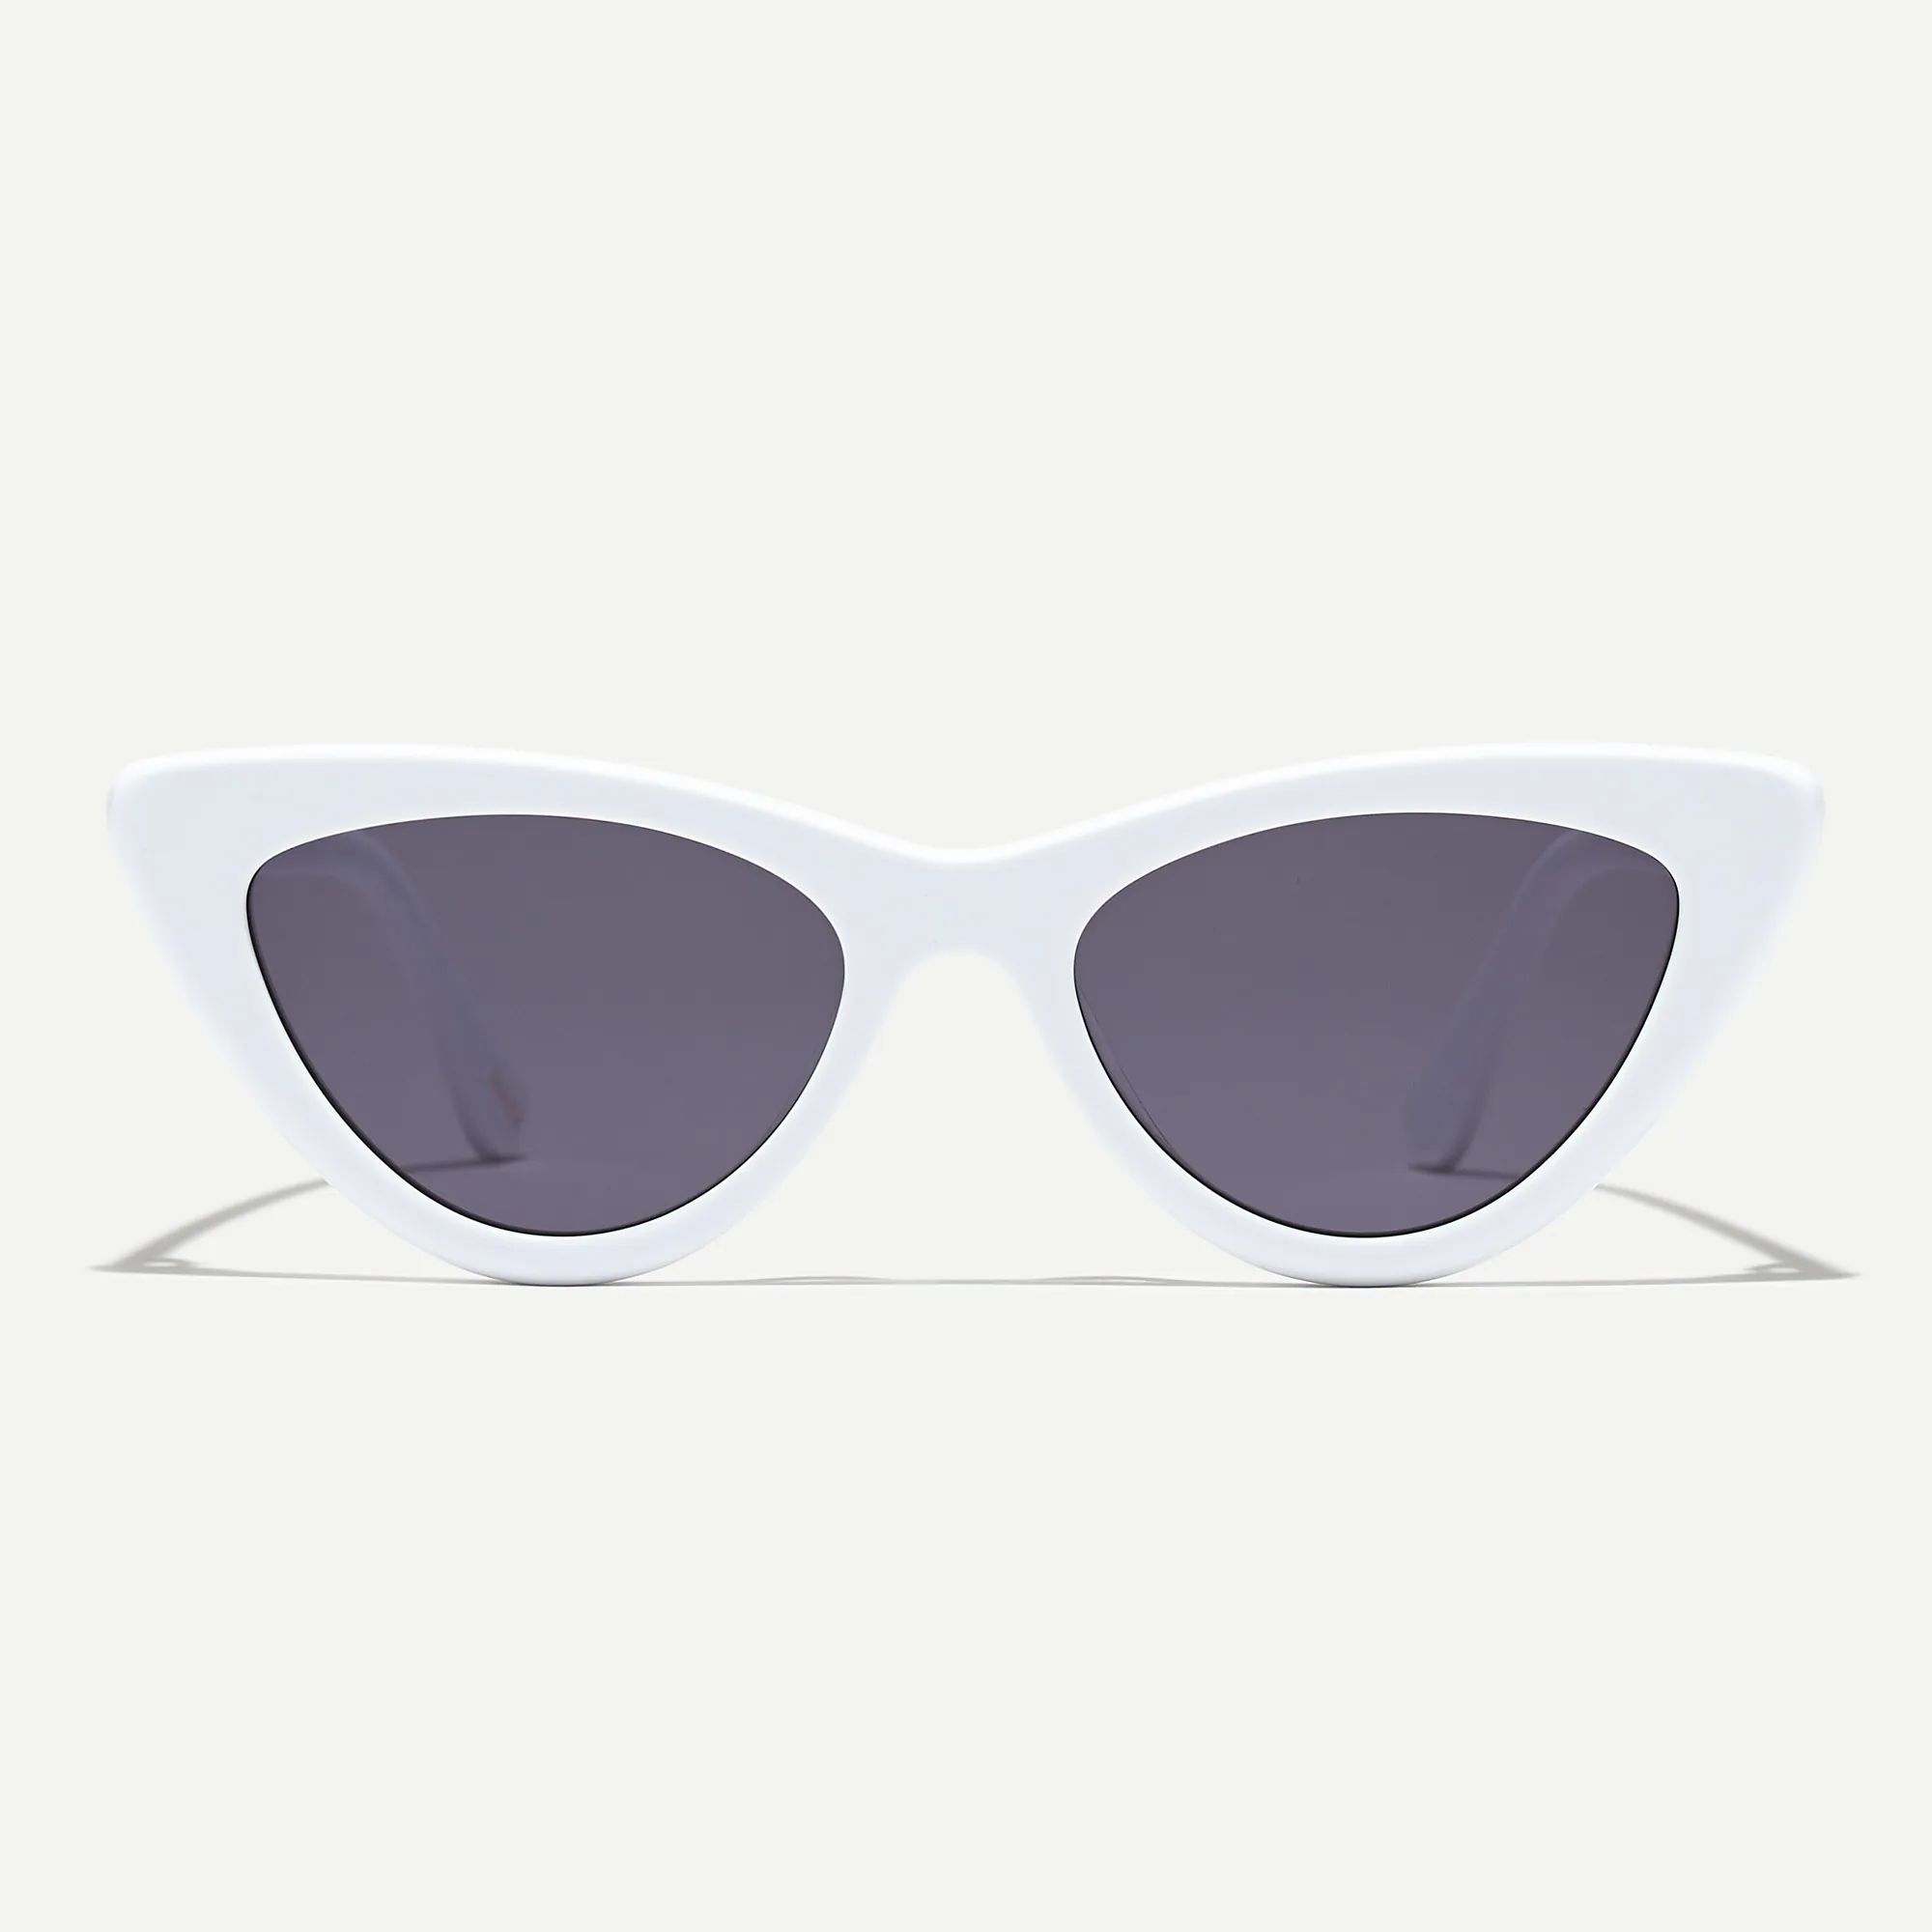 Bungalow cat eye sunglasses | J.Crew US